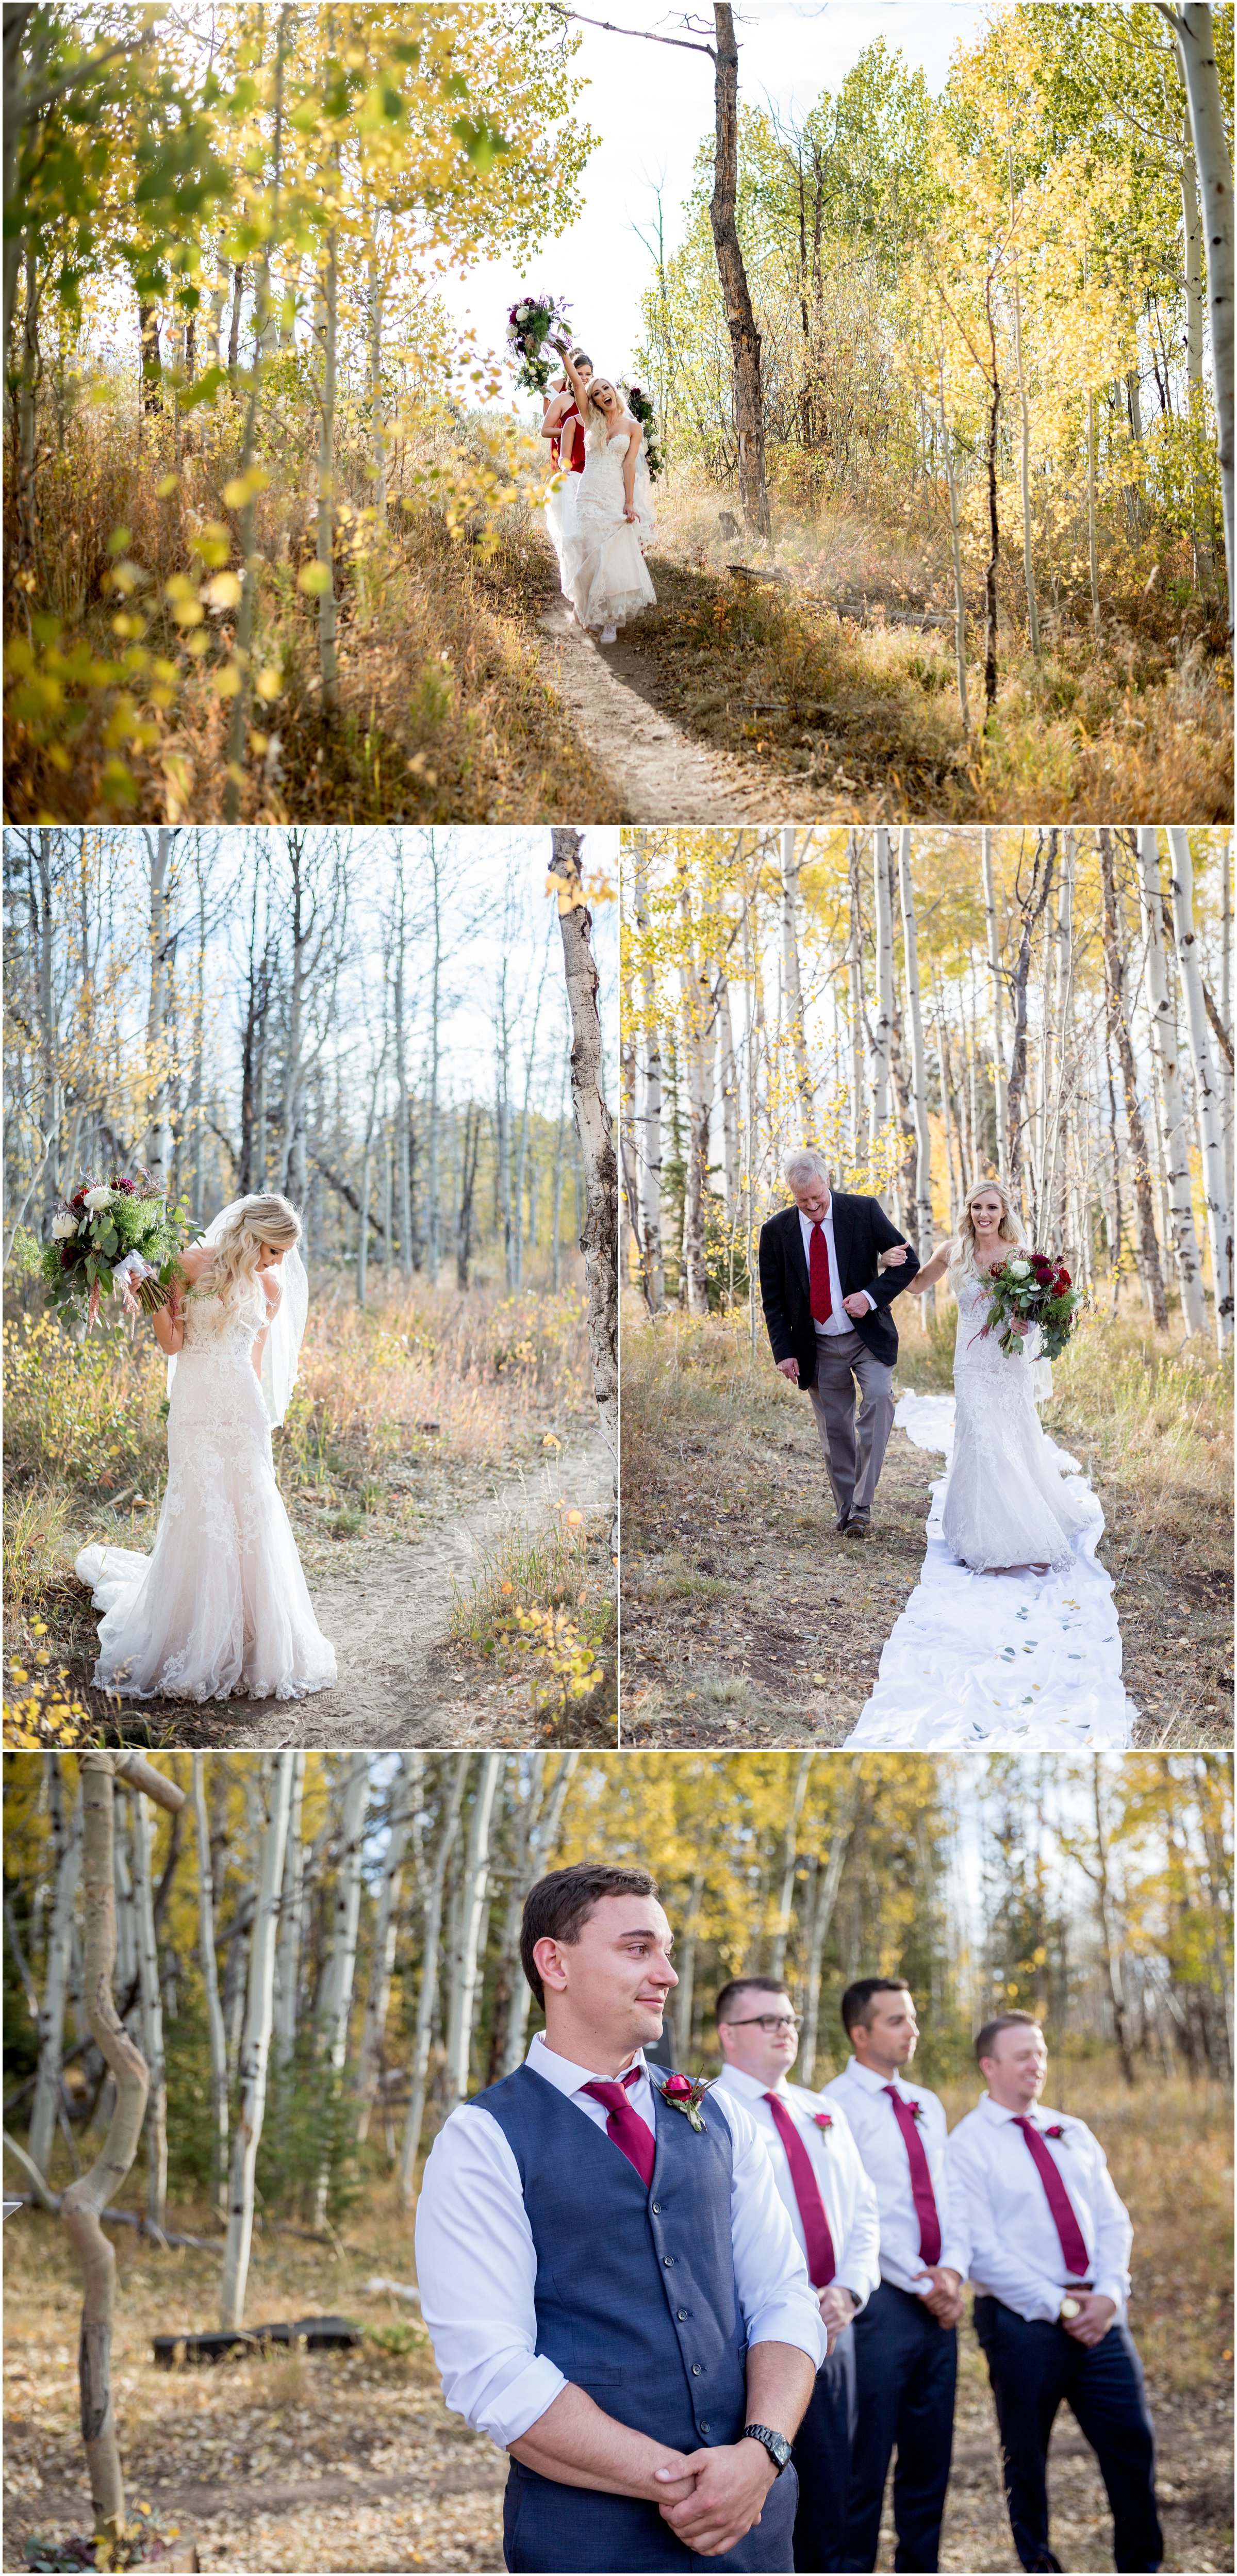 Breckenridge, Colorado Wedding in Aspen Grove by Greeley, Colorado Wedding Photographer